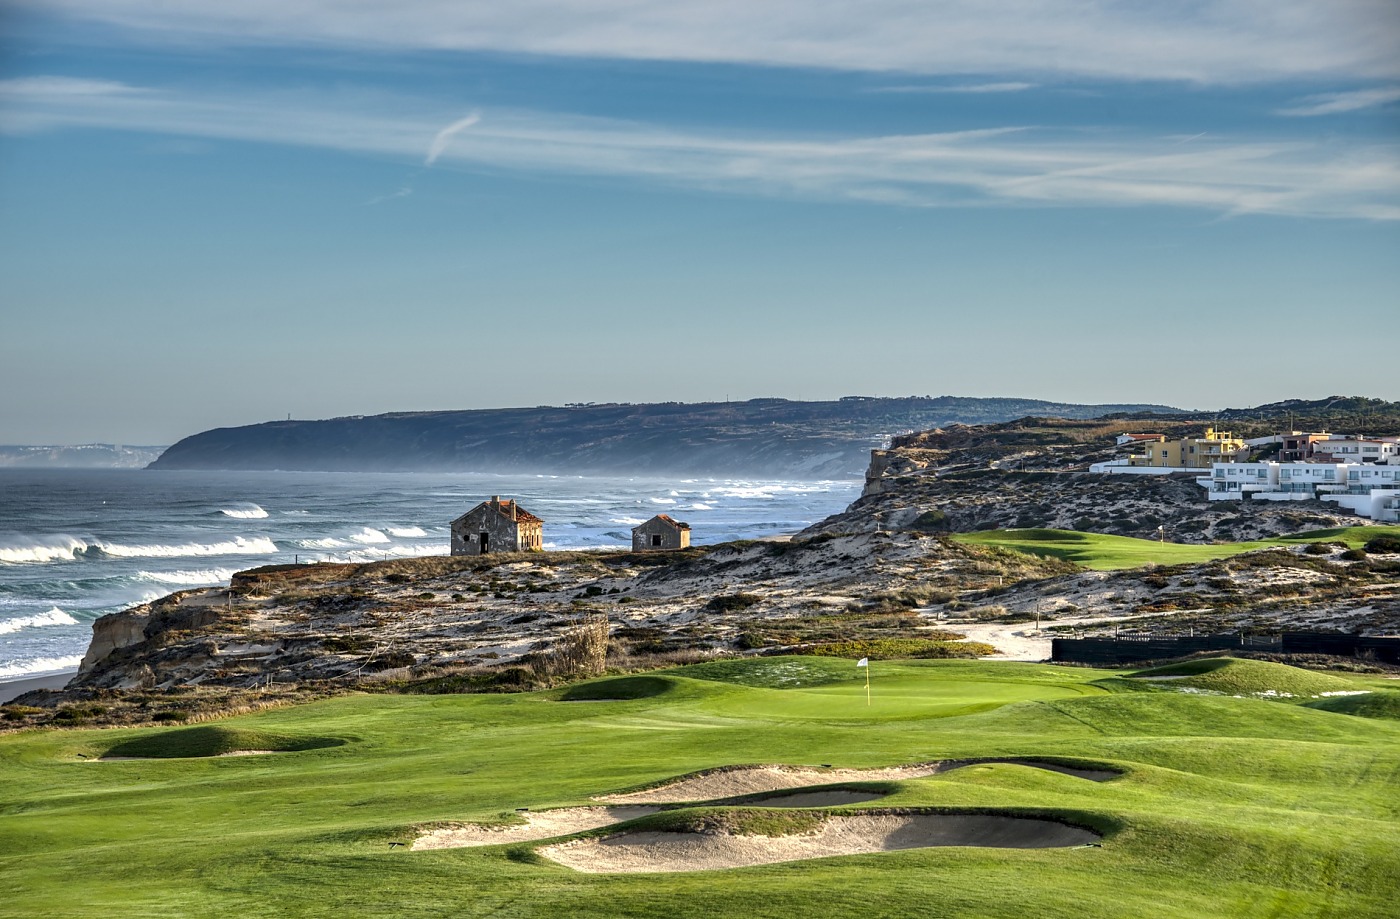 Praia D El Rey Golf Course Golf Courses Golf Holidays In